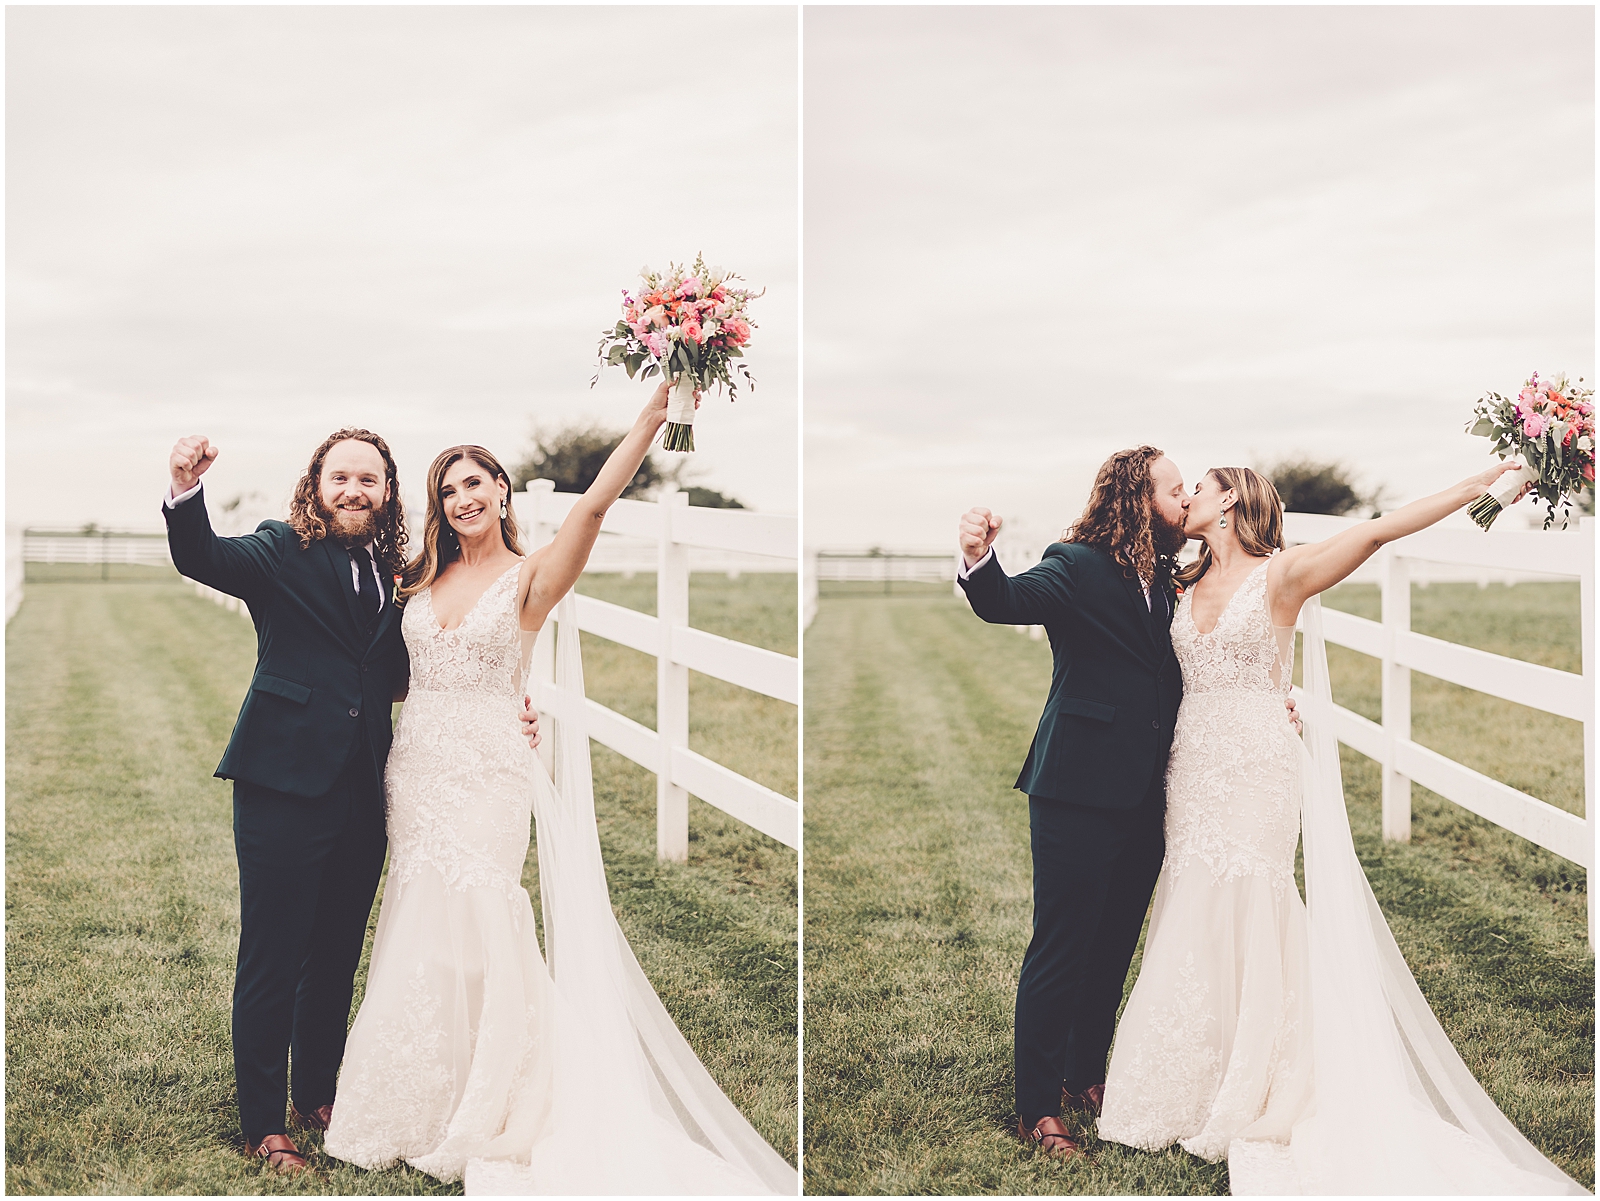 Marisa & Kristopher's summer Northfork Farm wedding photos in Oswego, Illinois with Chicagoland wedding photographer Kara Evans Photographer.